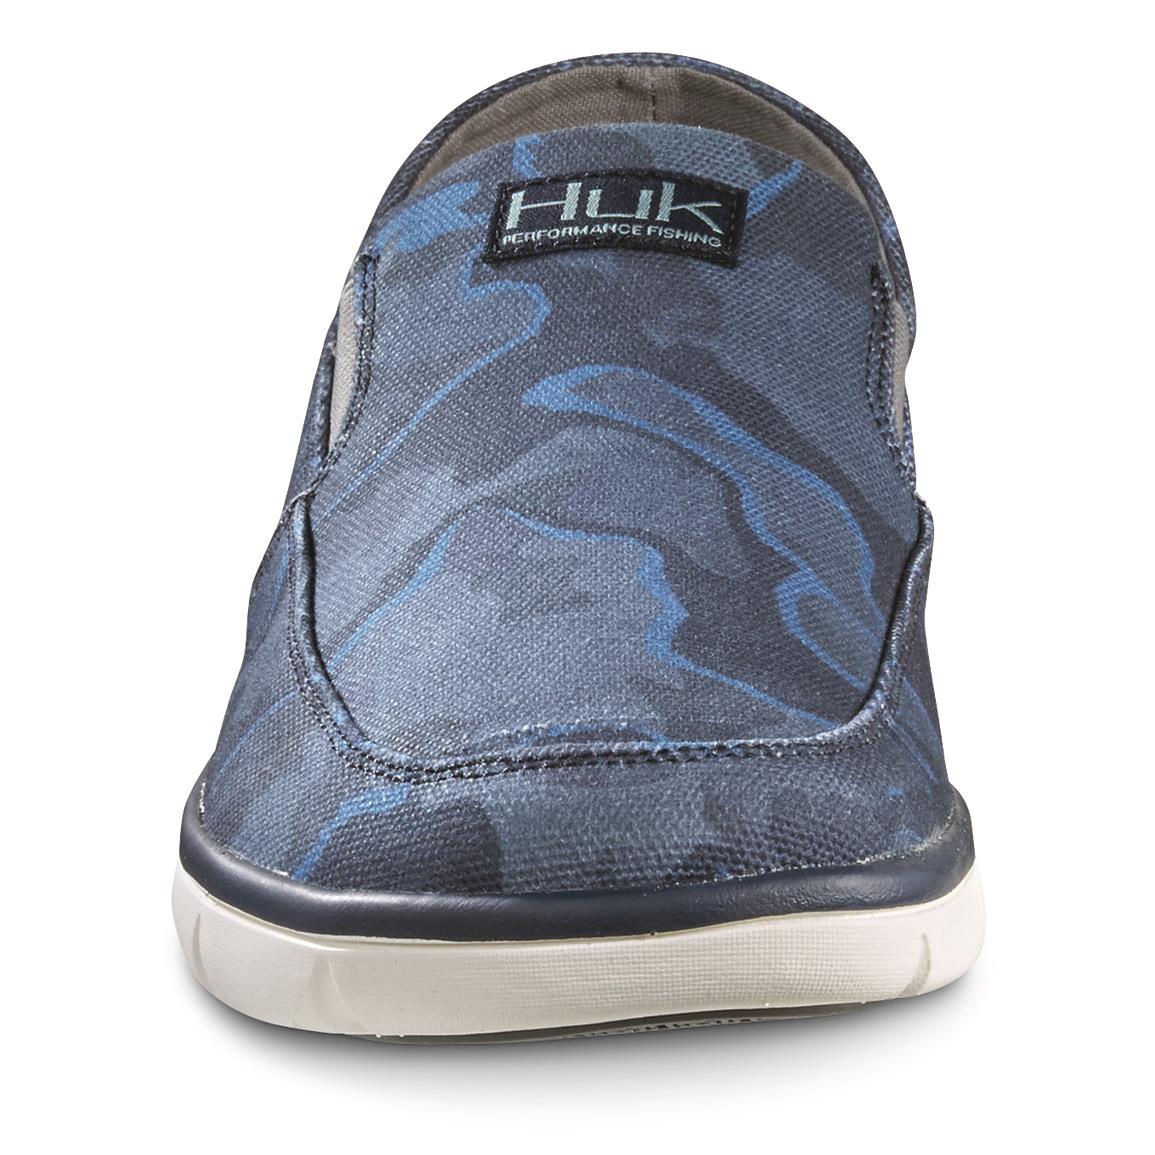 huk slip on shoes